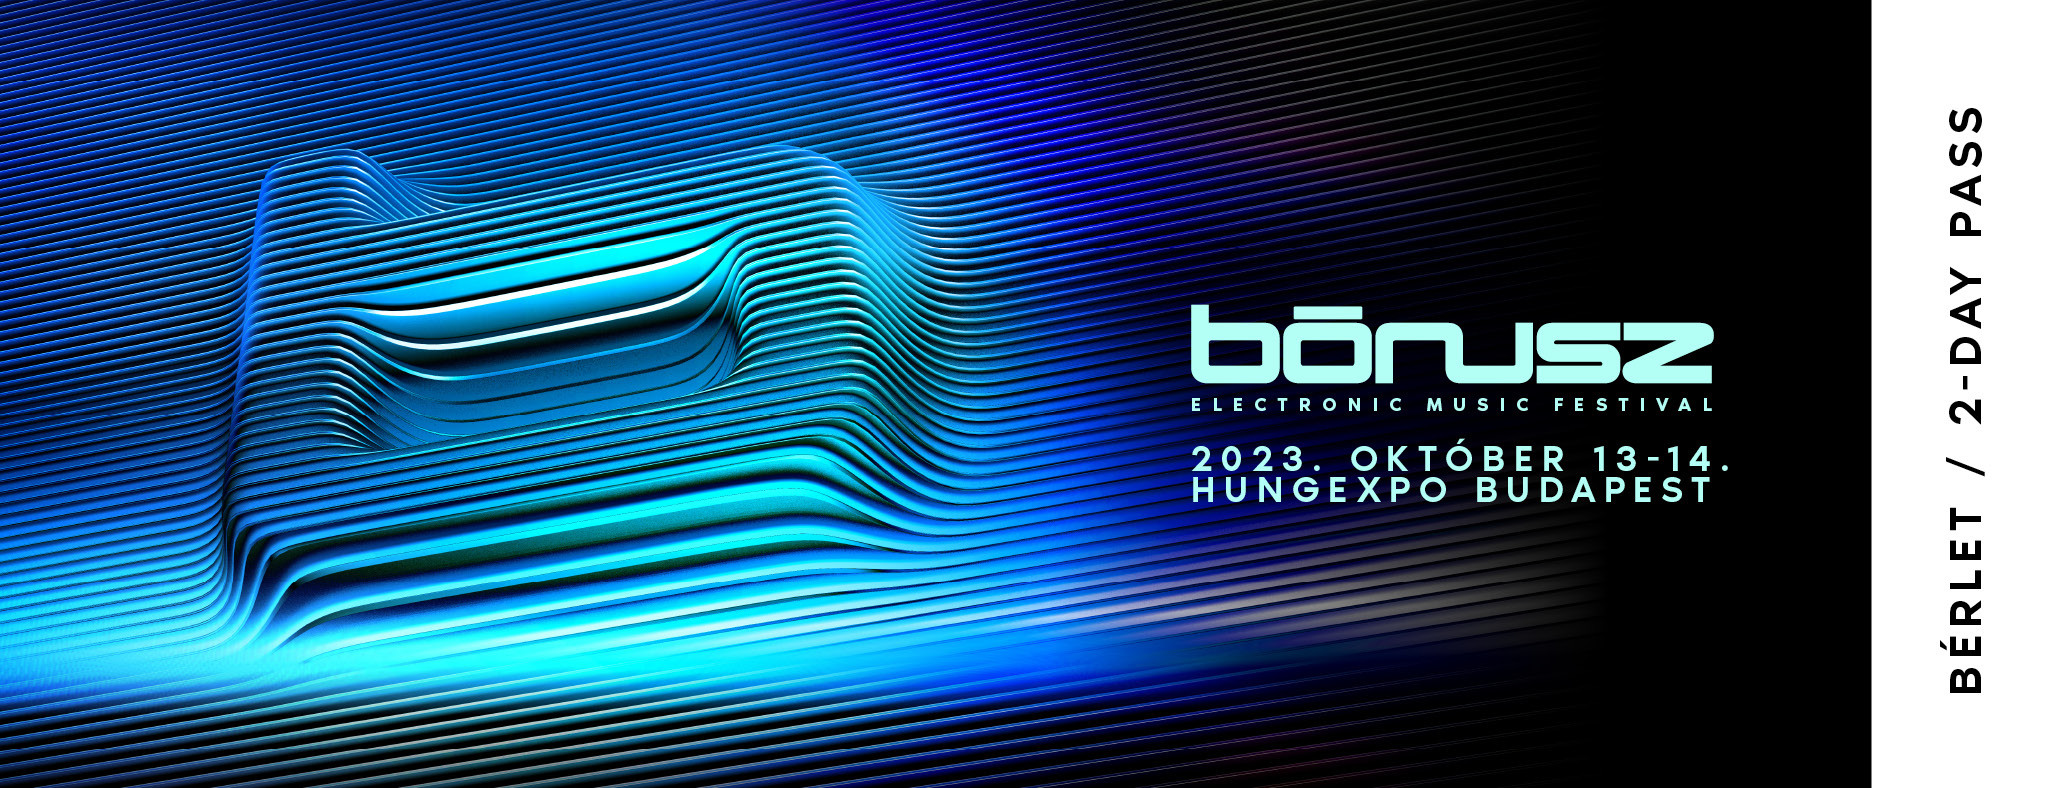 BÓNUSZ ELECTRONIC MUSIC FESTIVAL 2023 2-DAY PASS